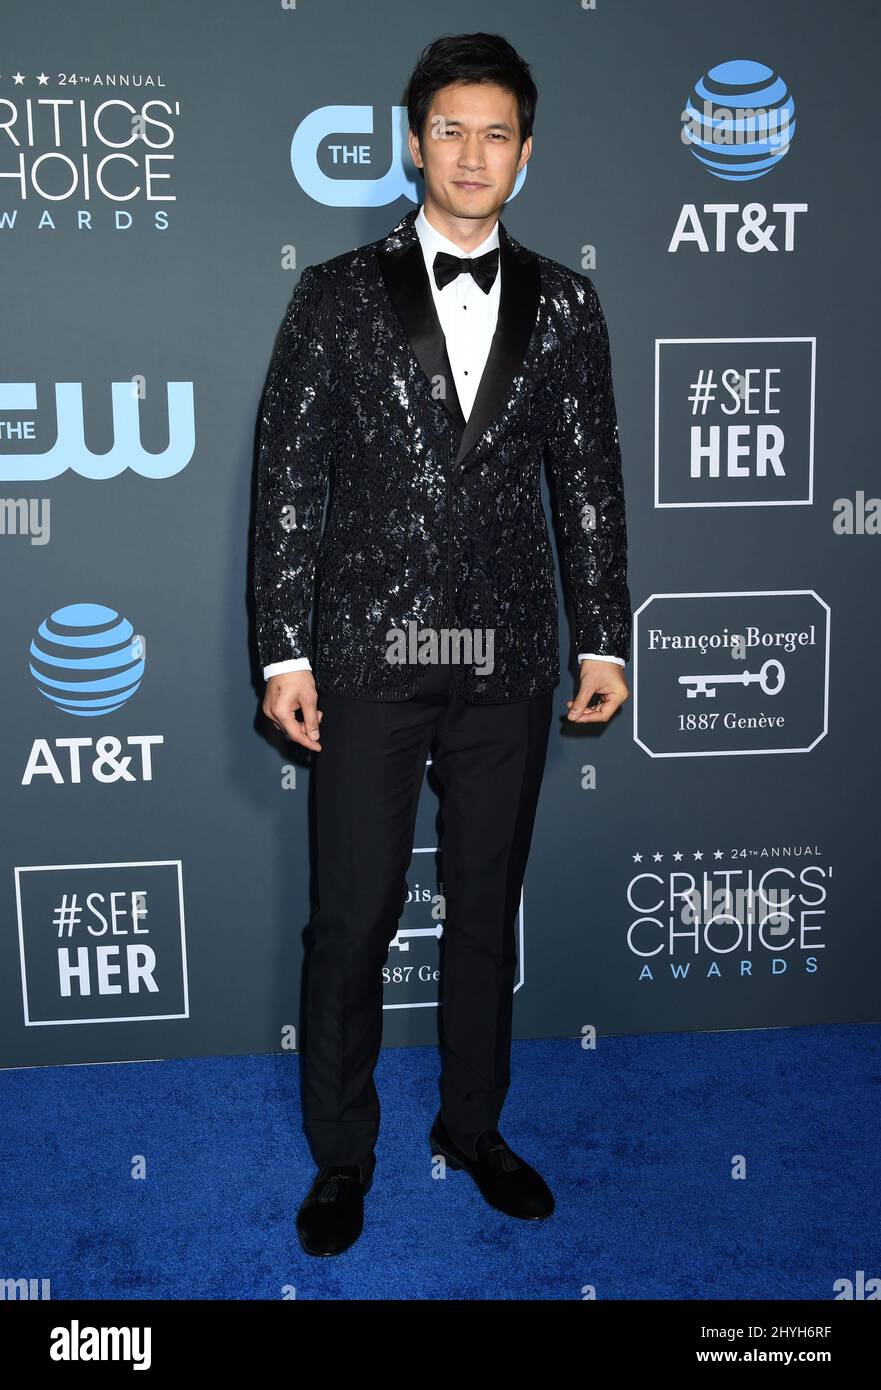 Harry Shum Jr. at the 24th Annual Critics' Choice Awards held at Barker Hanger on January 13, 2019 in Santa Monica, USA. Stock Photo